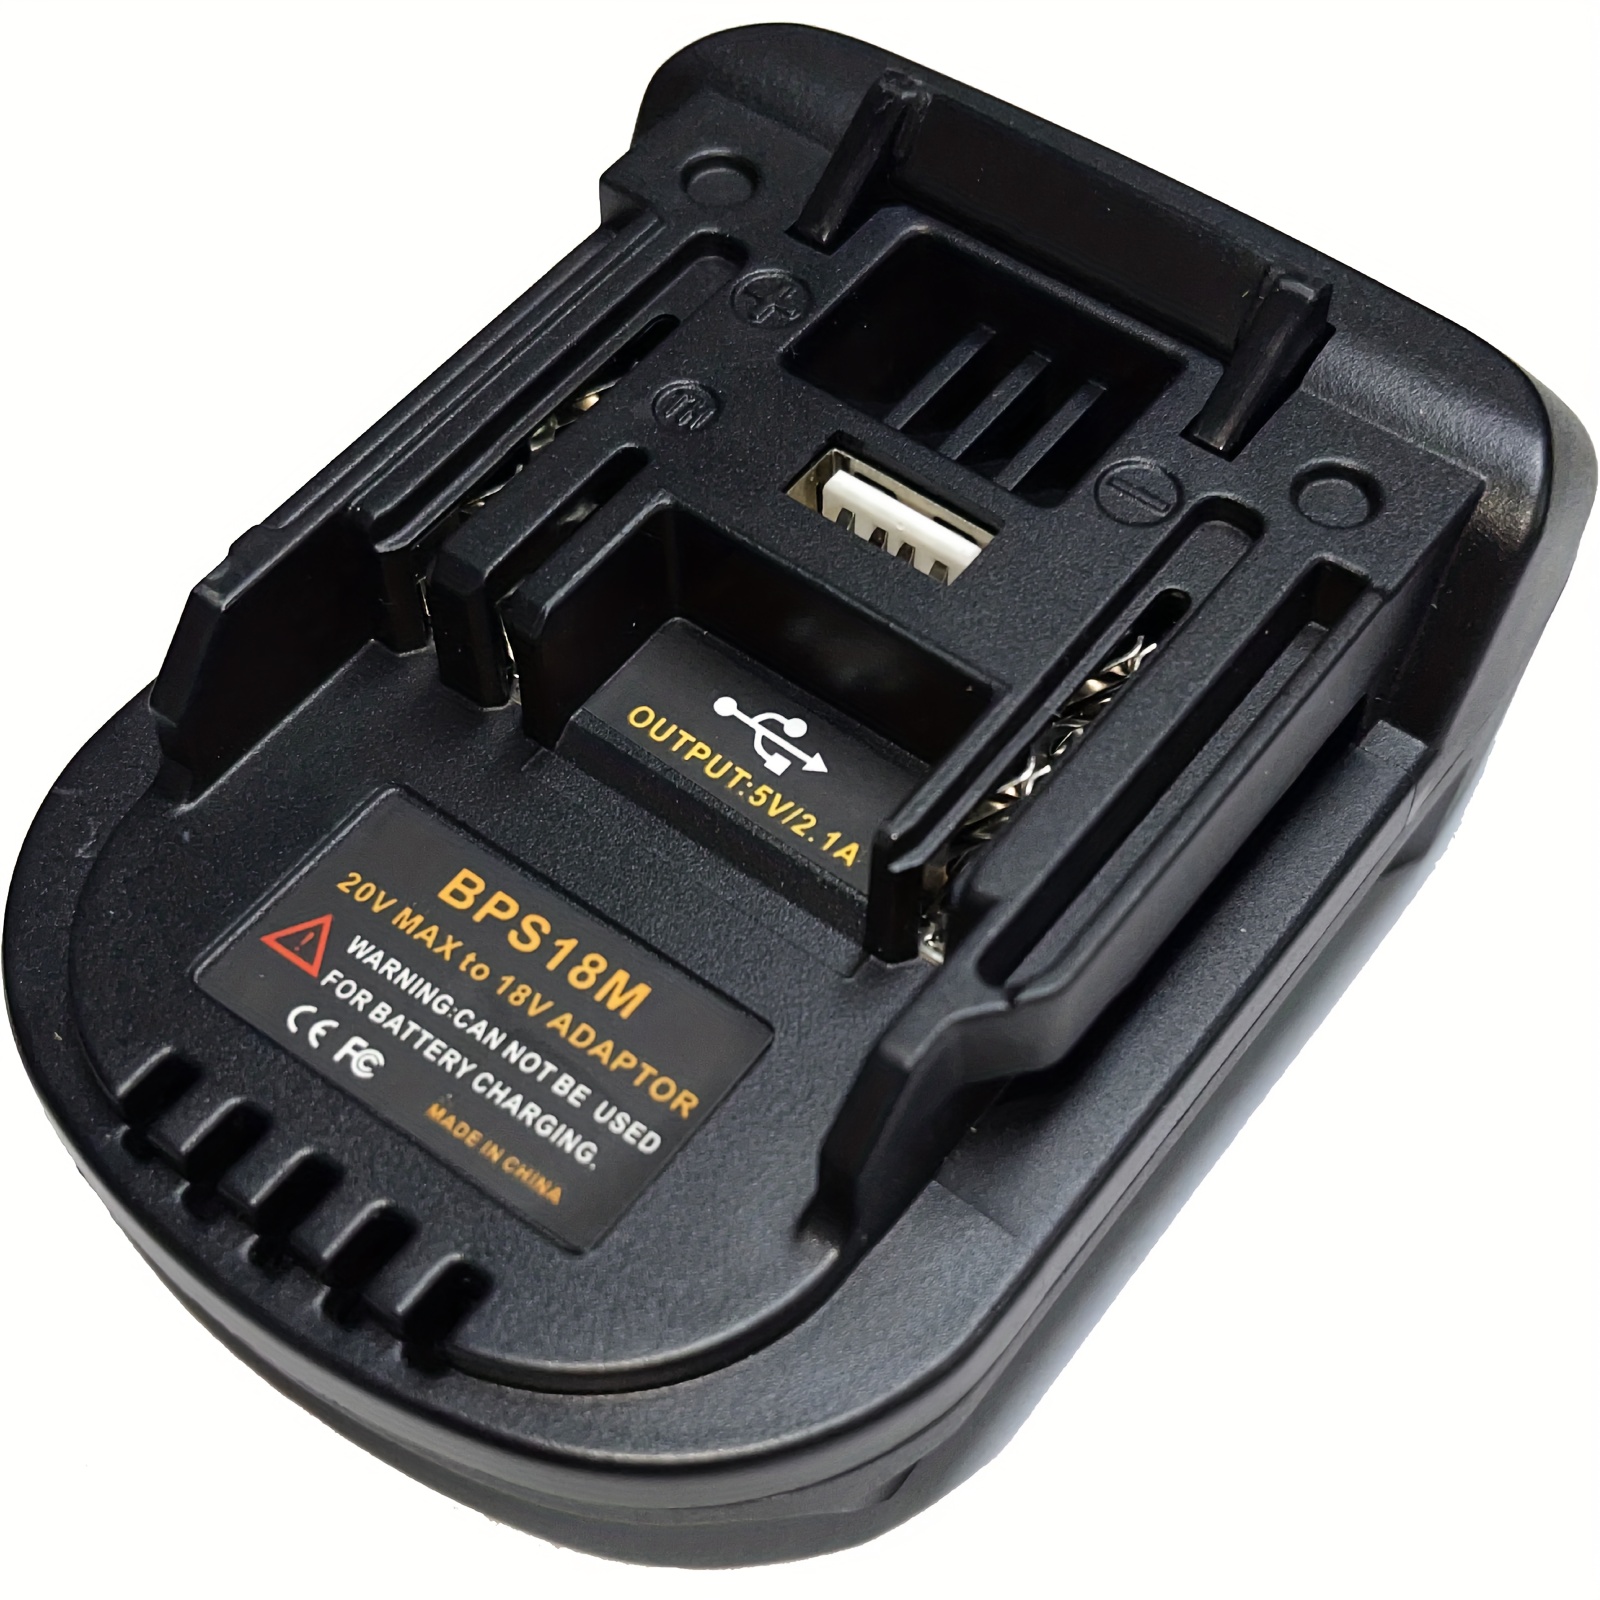 Black & Decker Porter Cable Stanley 20v Lithium Battery Converter